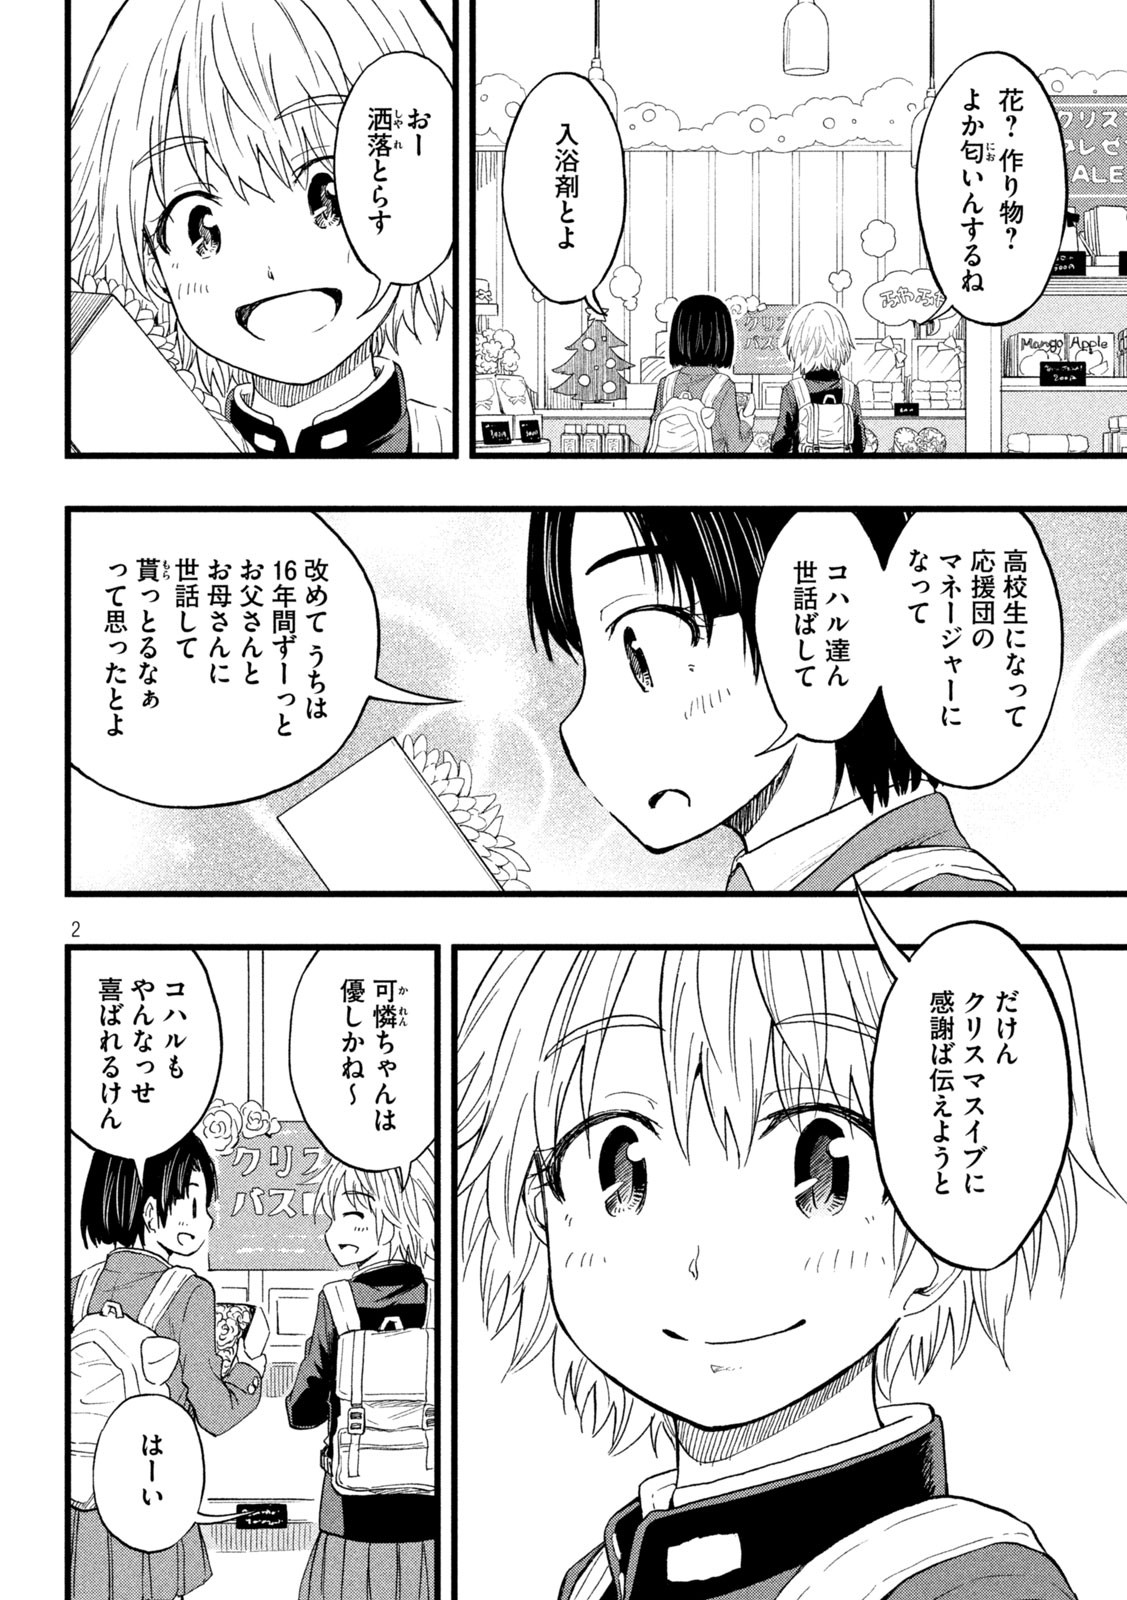 Koharu haru! - Chapter 75 - Page 2